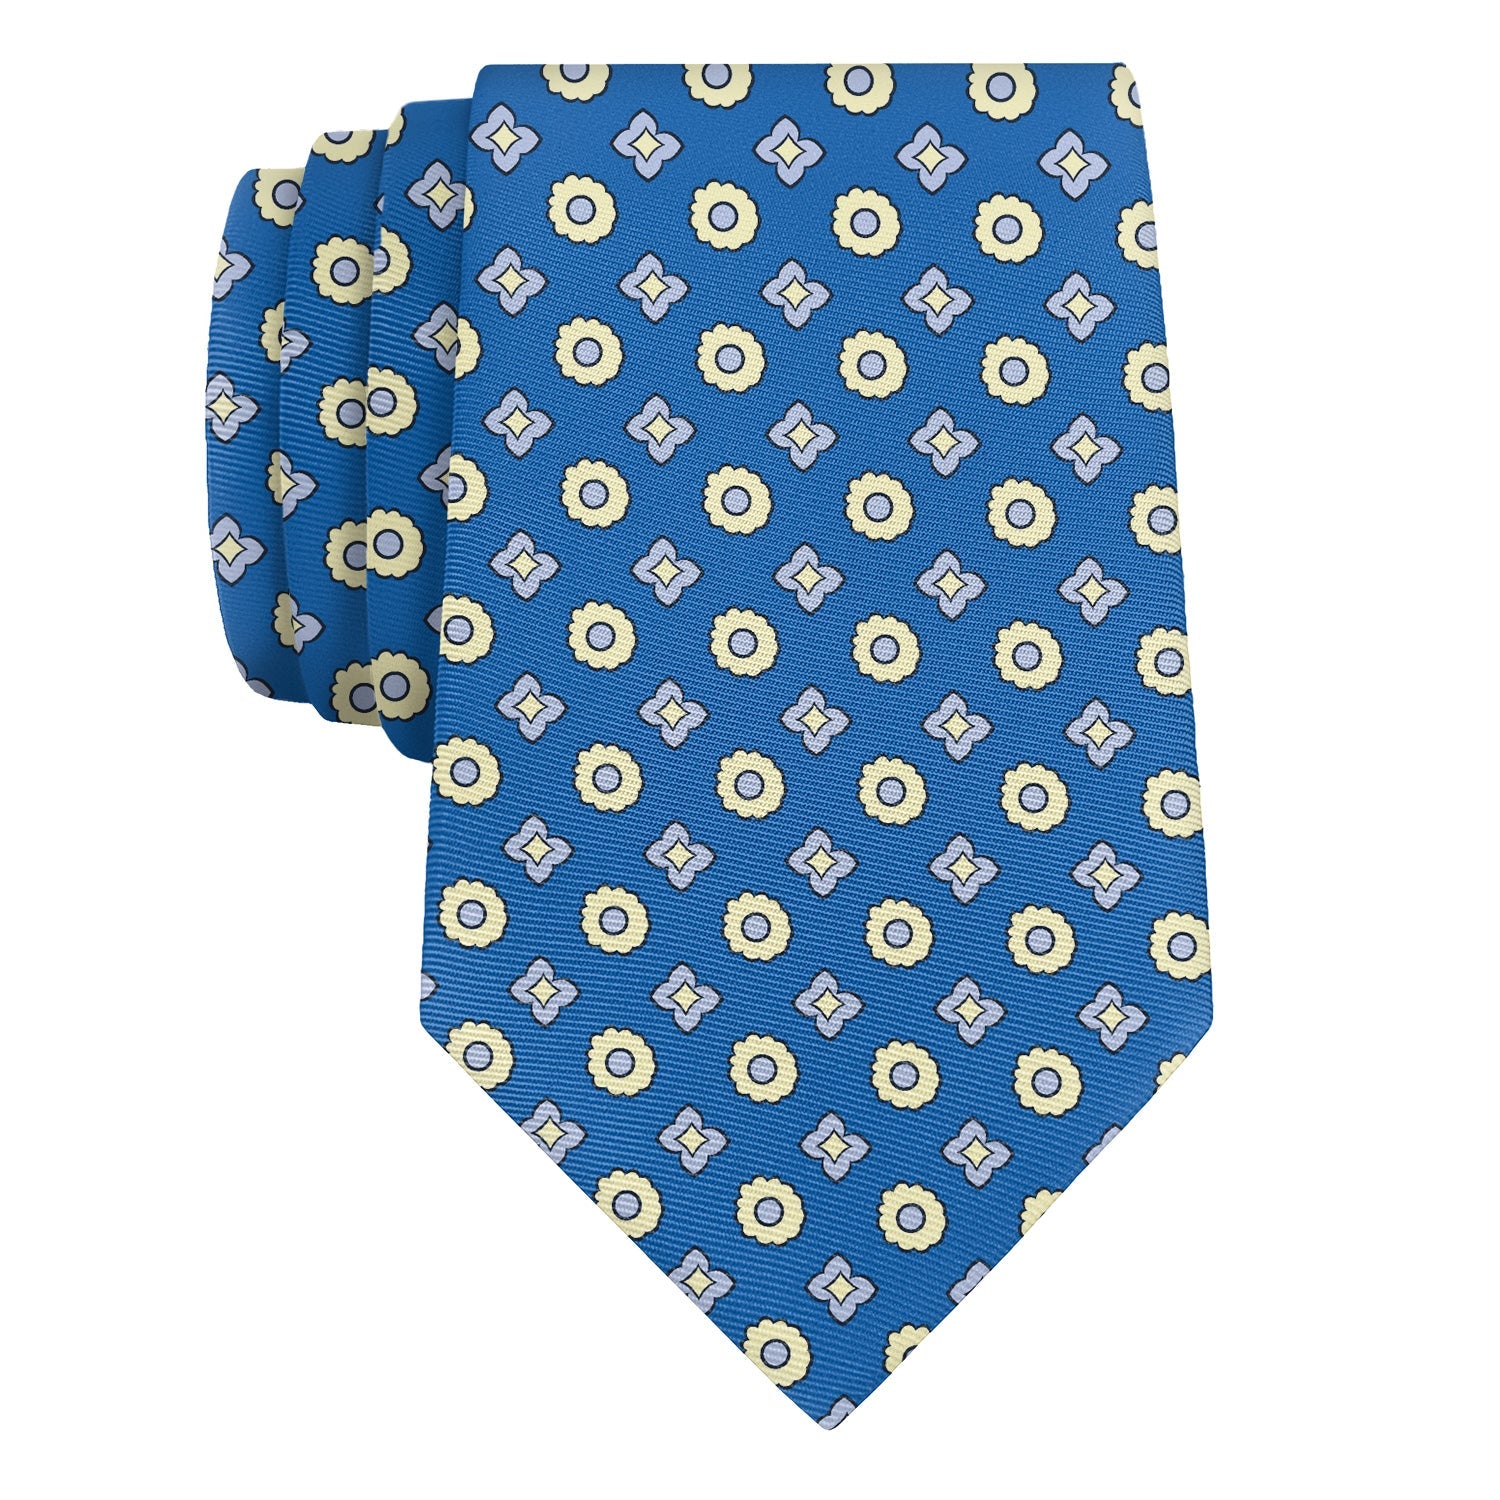 Hamling Necktie - Rolled - Knotty Tie Co.